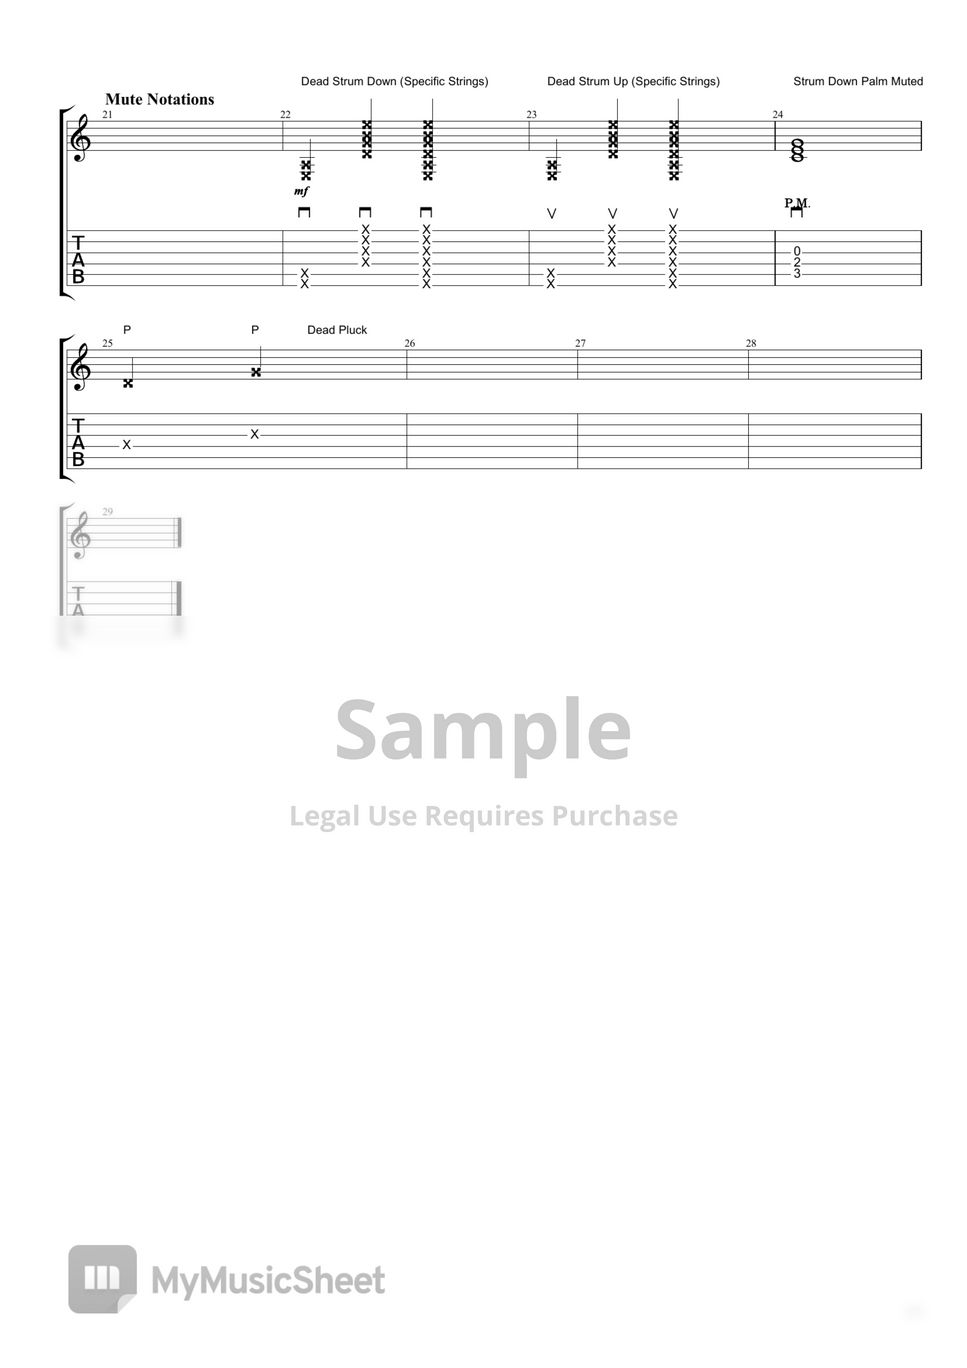 Harrison Wong - Music Sheet/Tablature Notation Legend (See description)